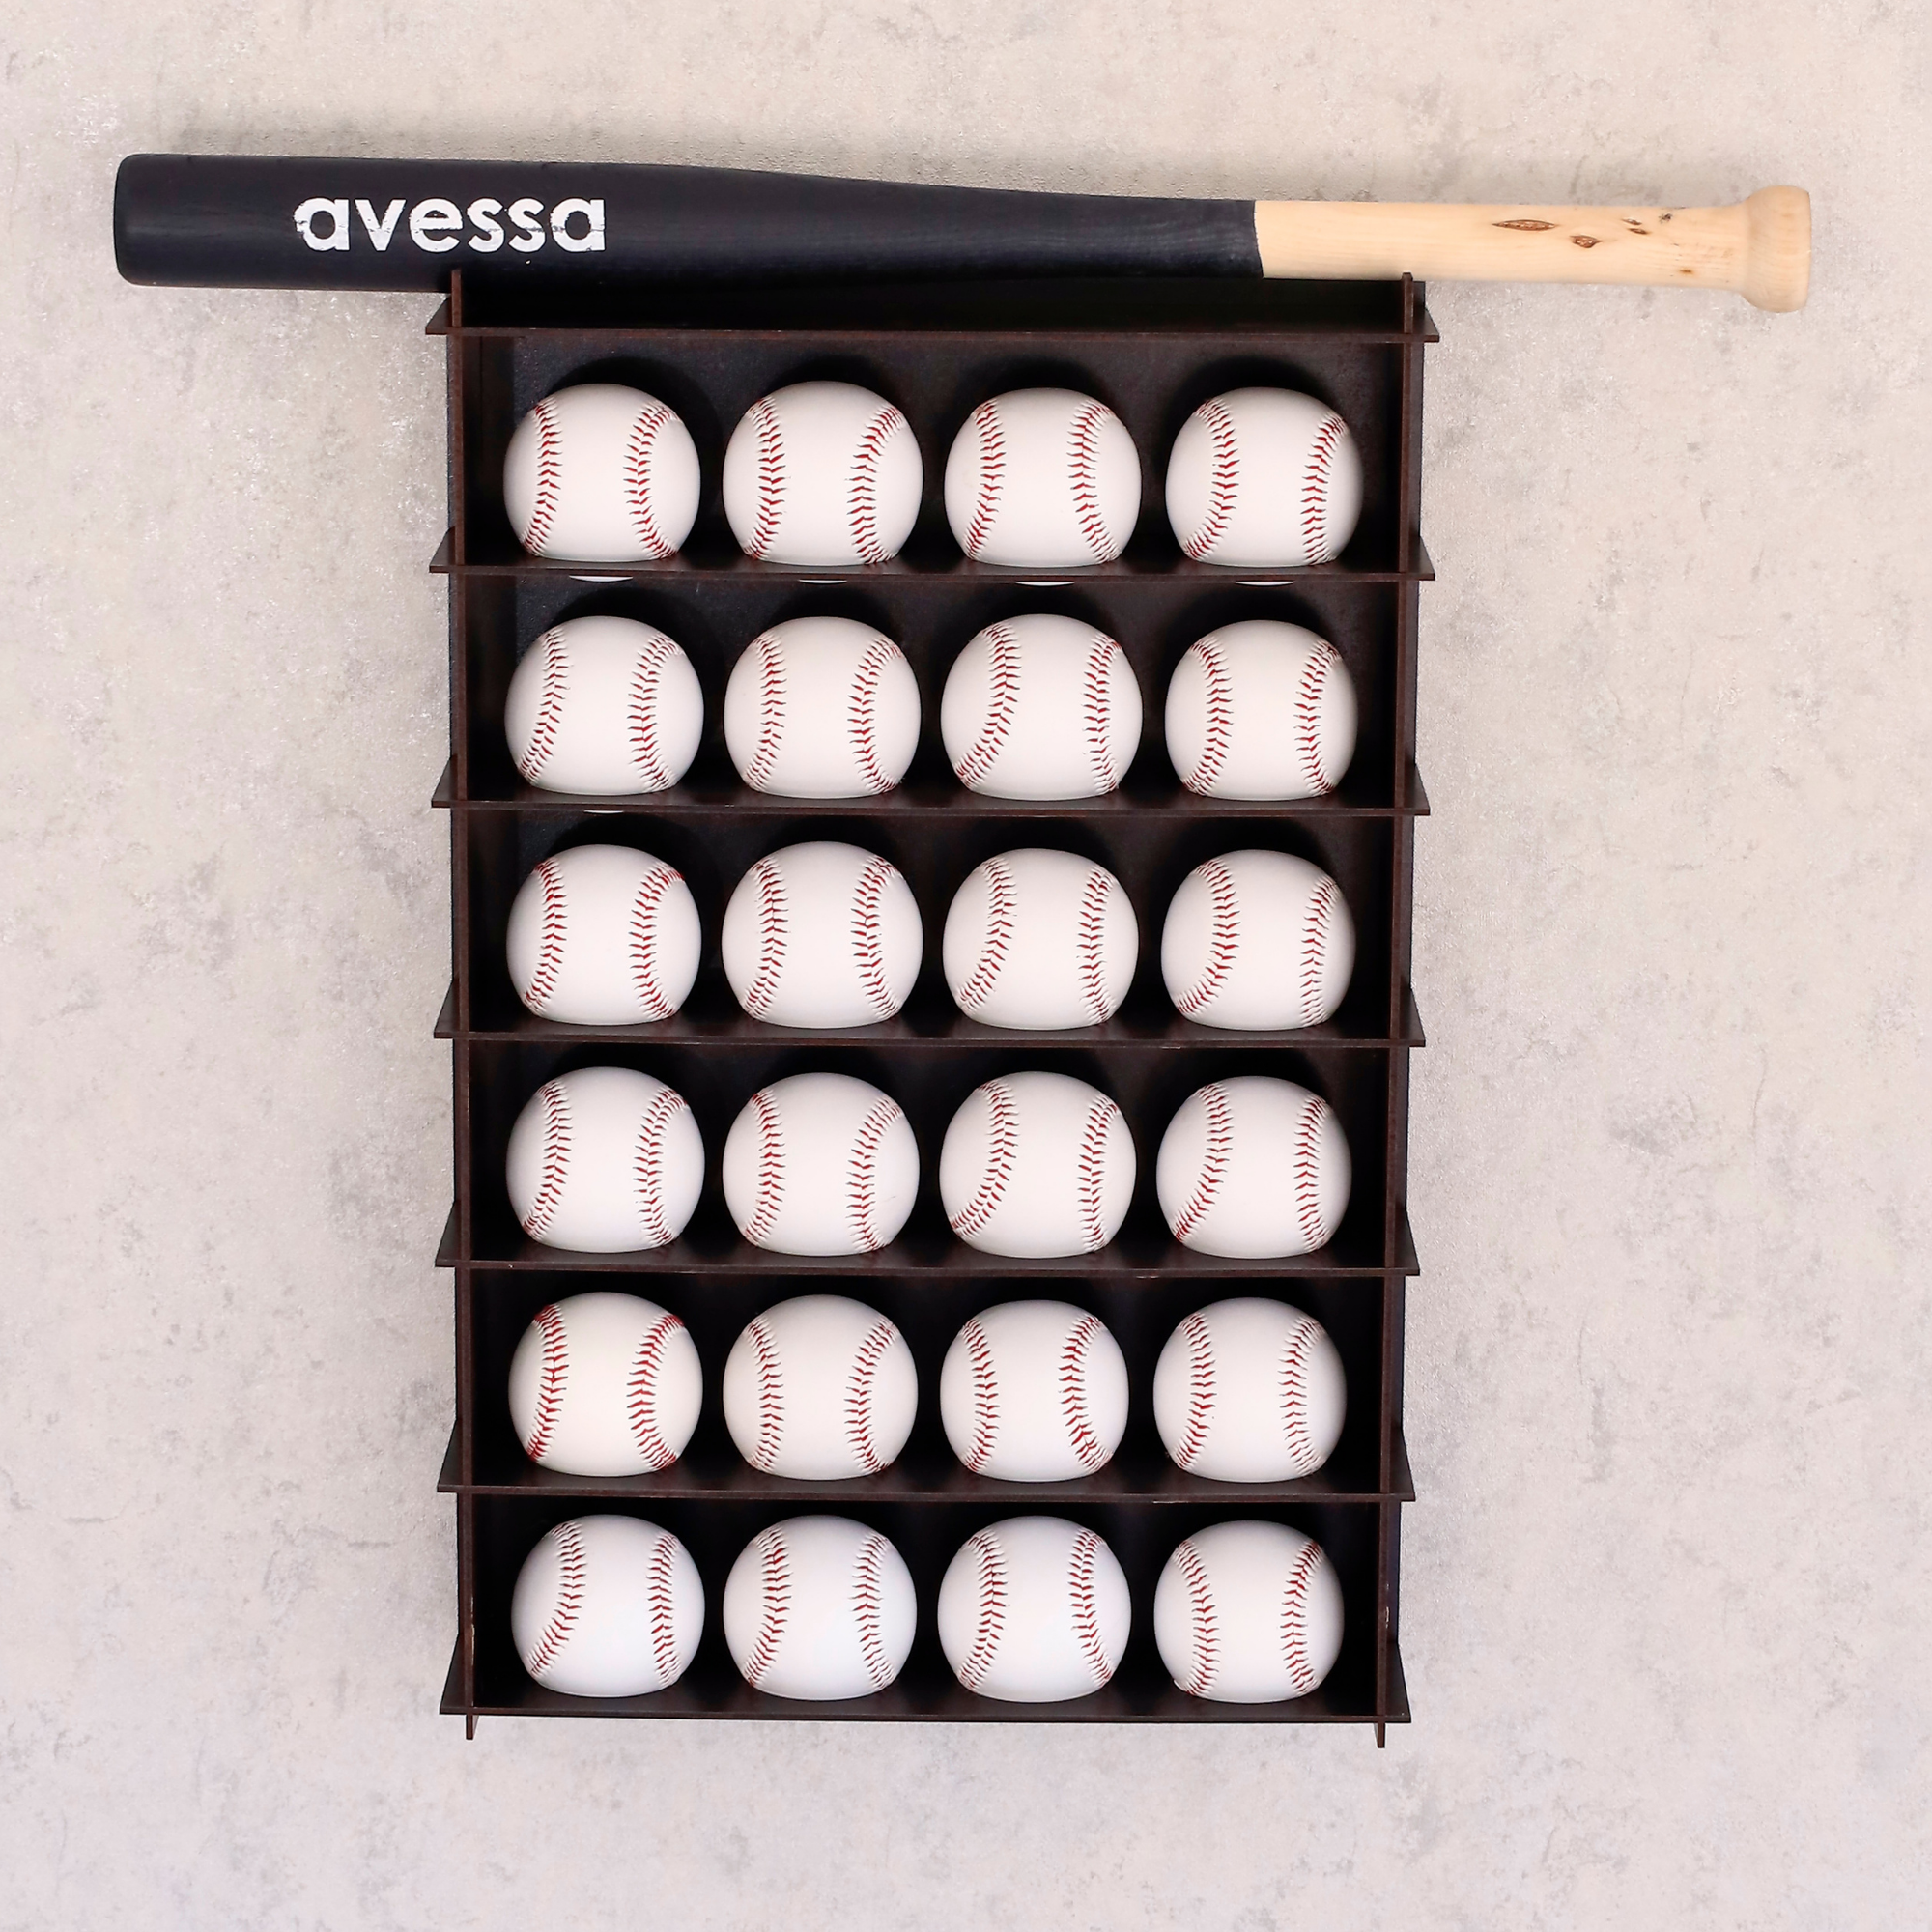 Black Baseball Display Case